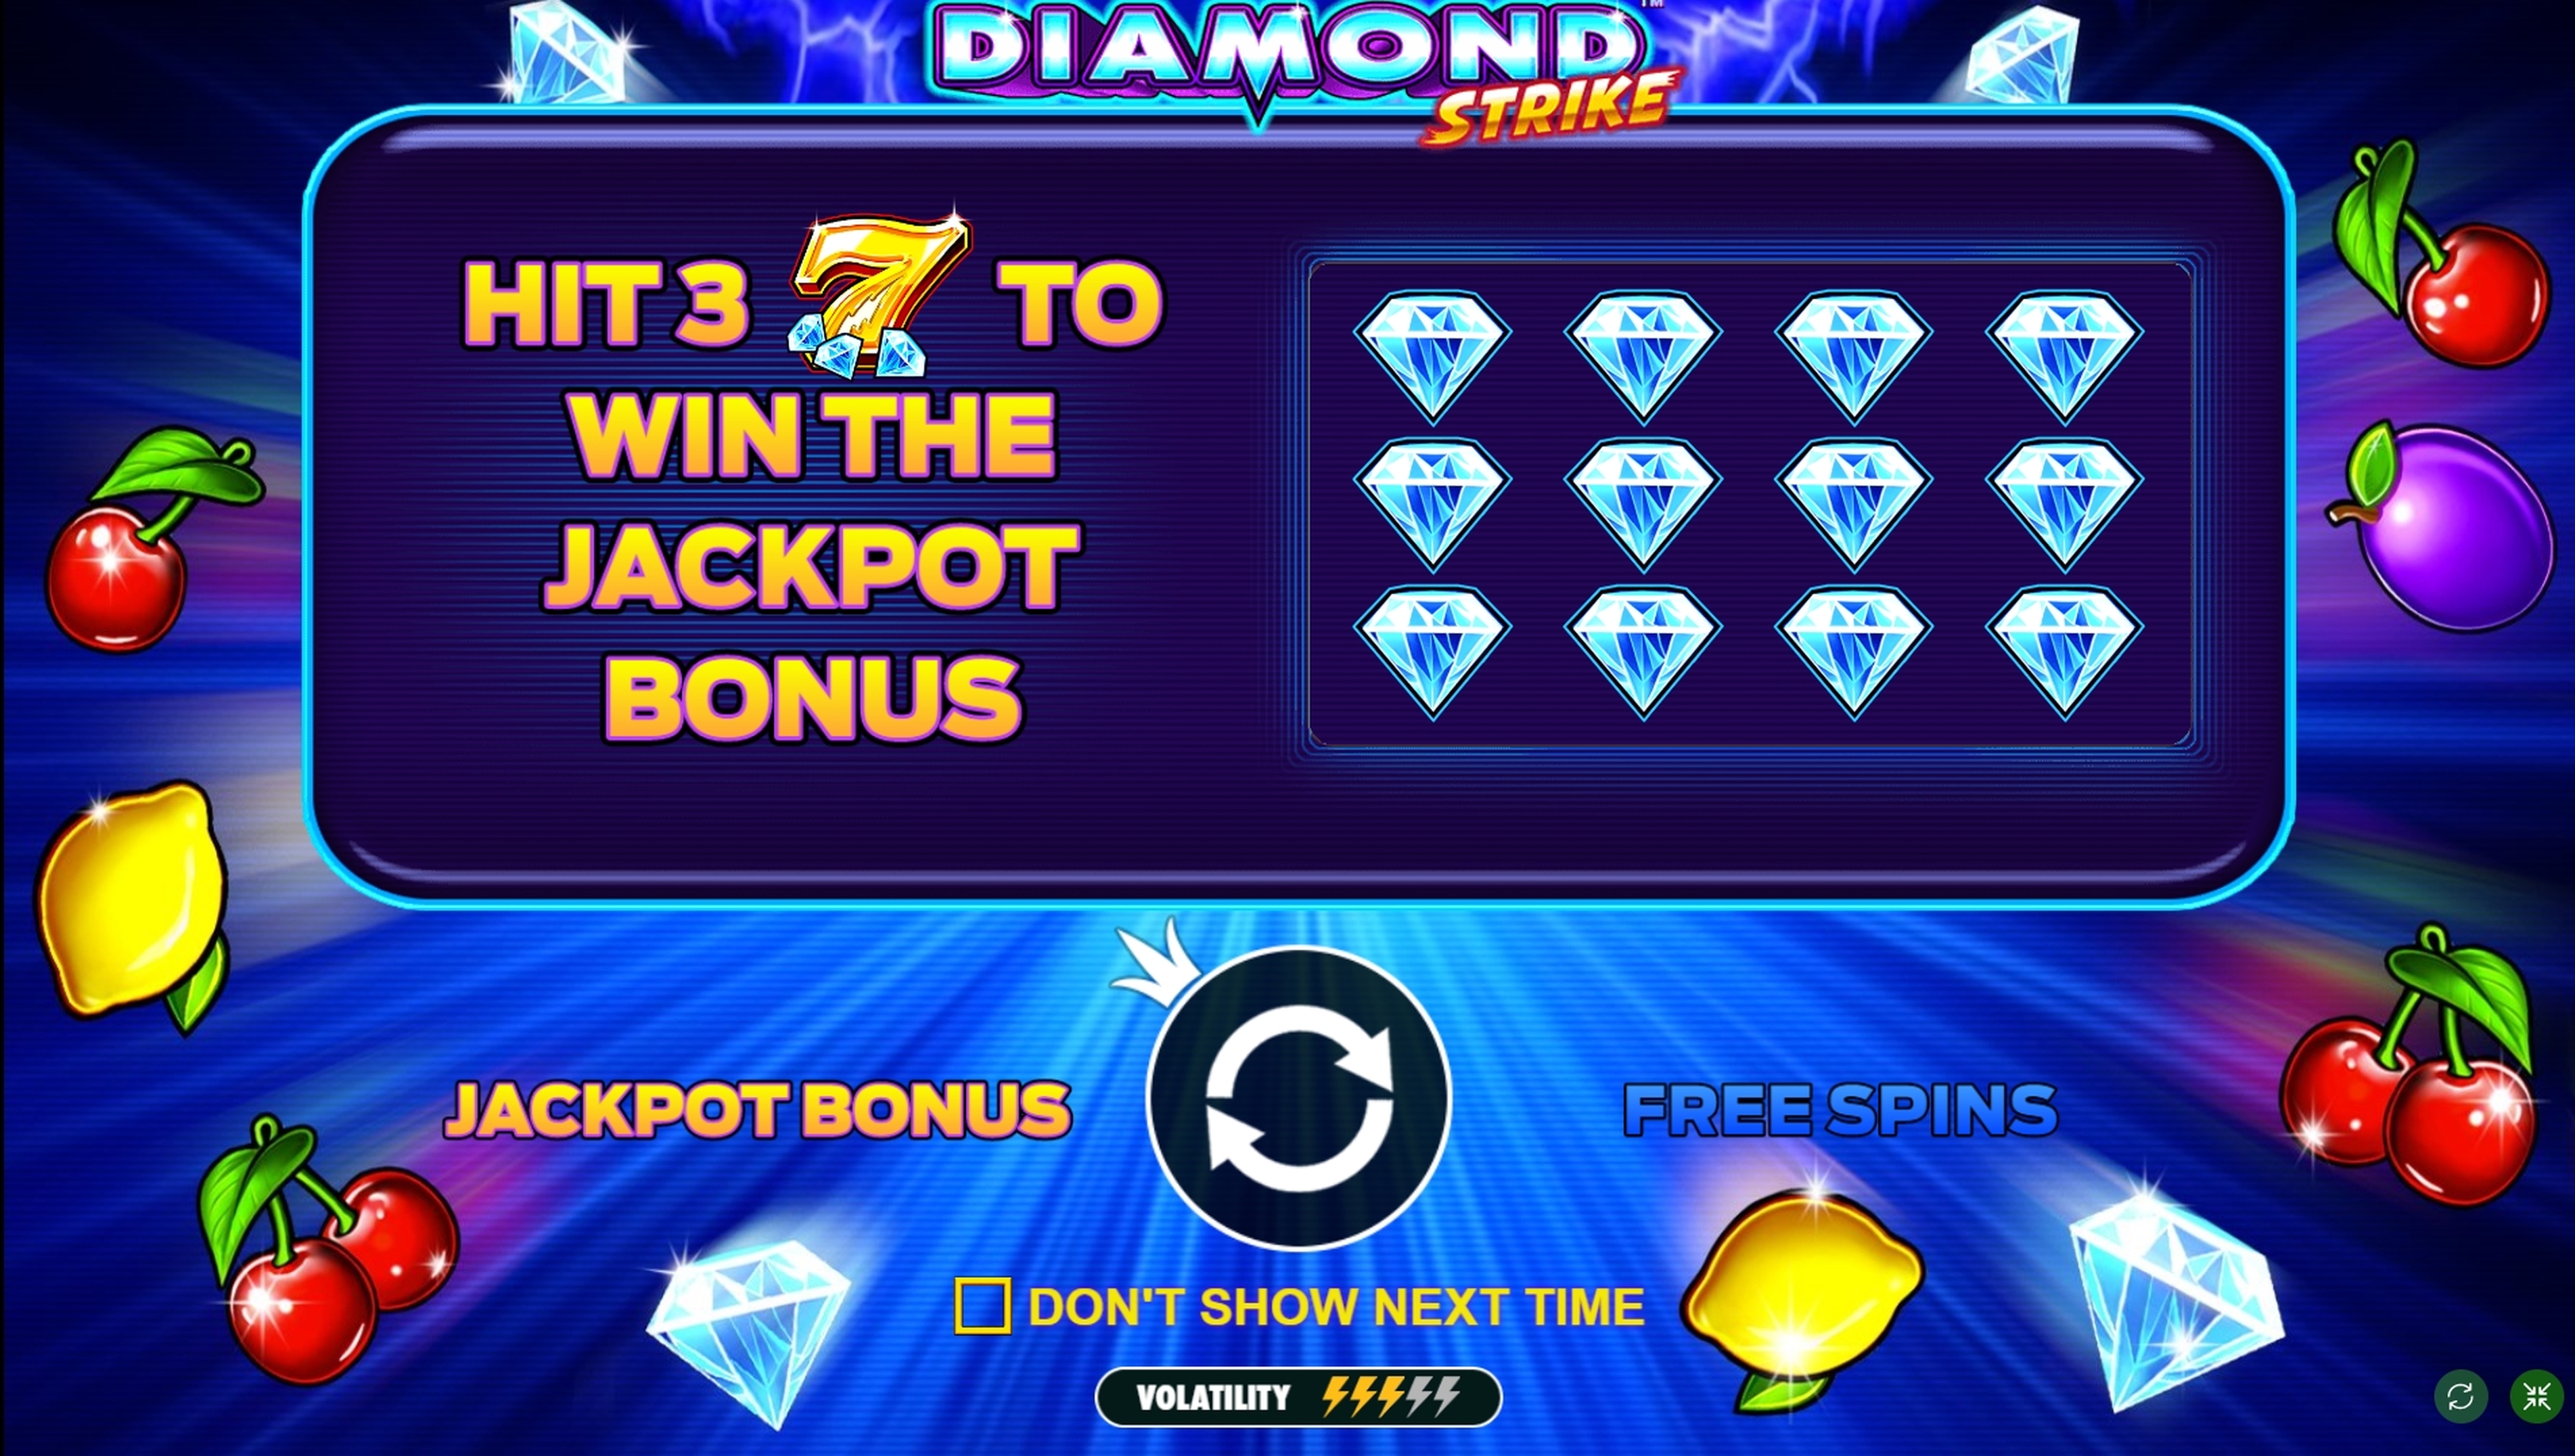 Play Diamond Strike Free Casino Slot Game by Pragmatic Play